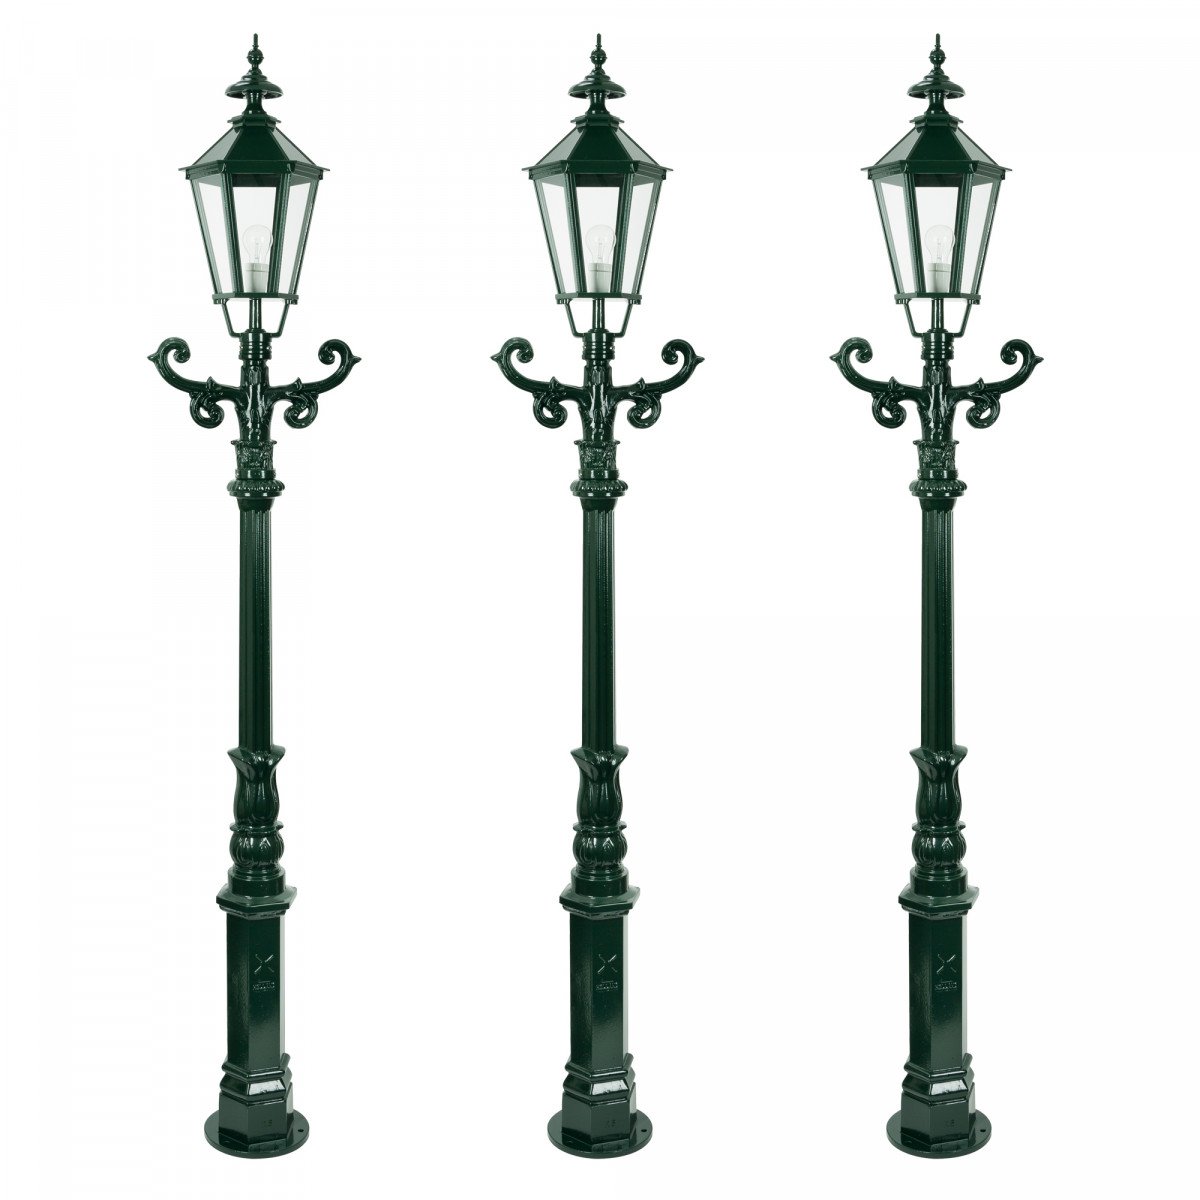  Set de 3 lampadaires de jardin De Kennemer avec lanternes hexagonales